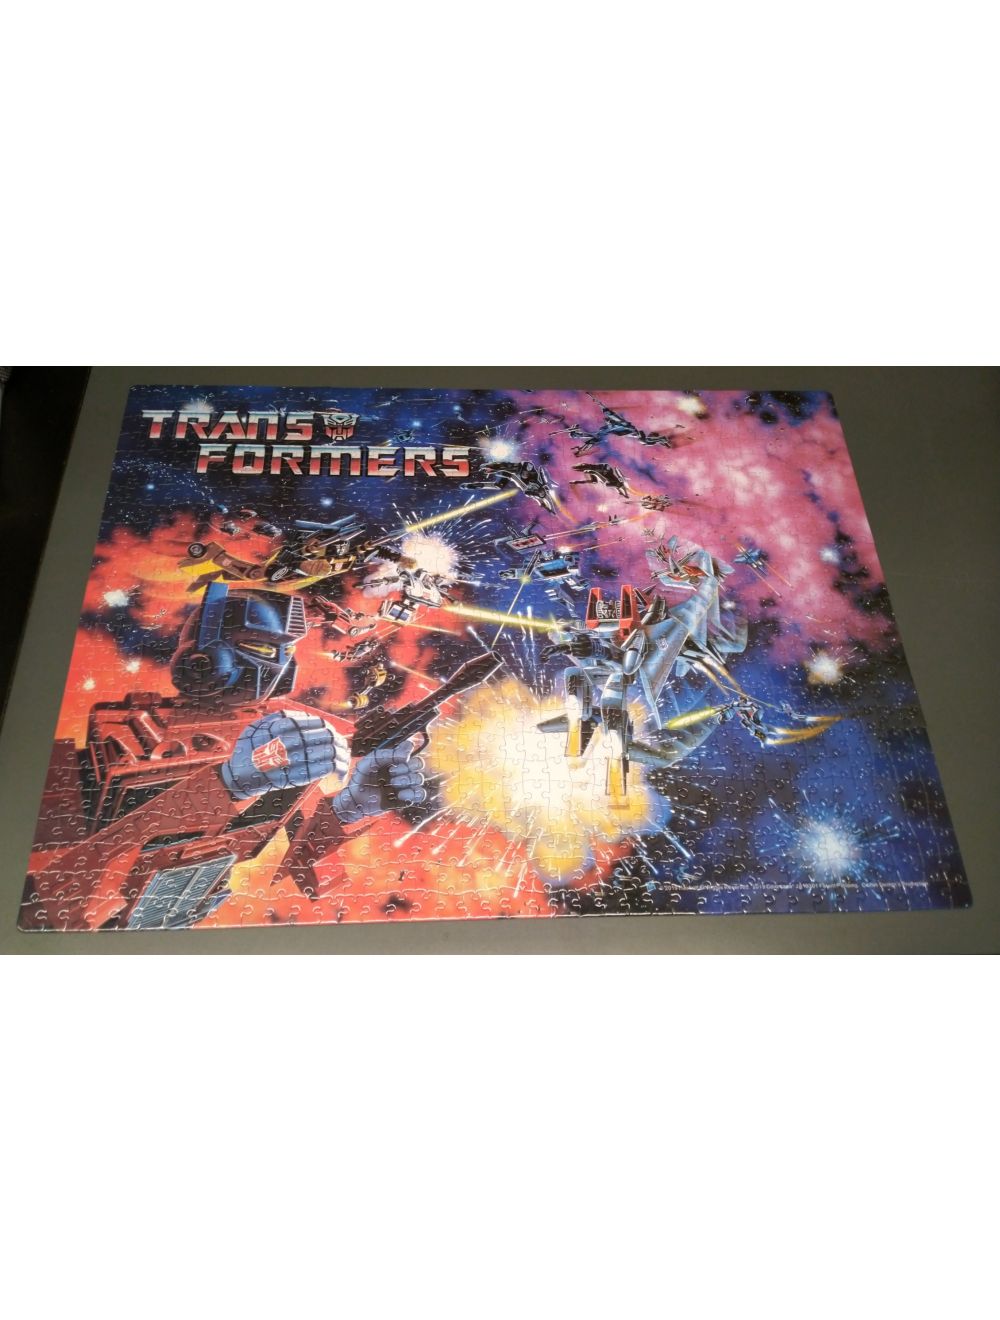 Hasbro Transformer Ocean Studio picture puzzle,In stock. 